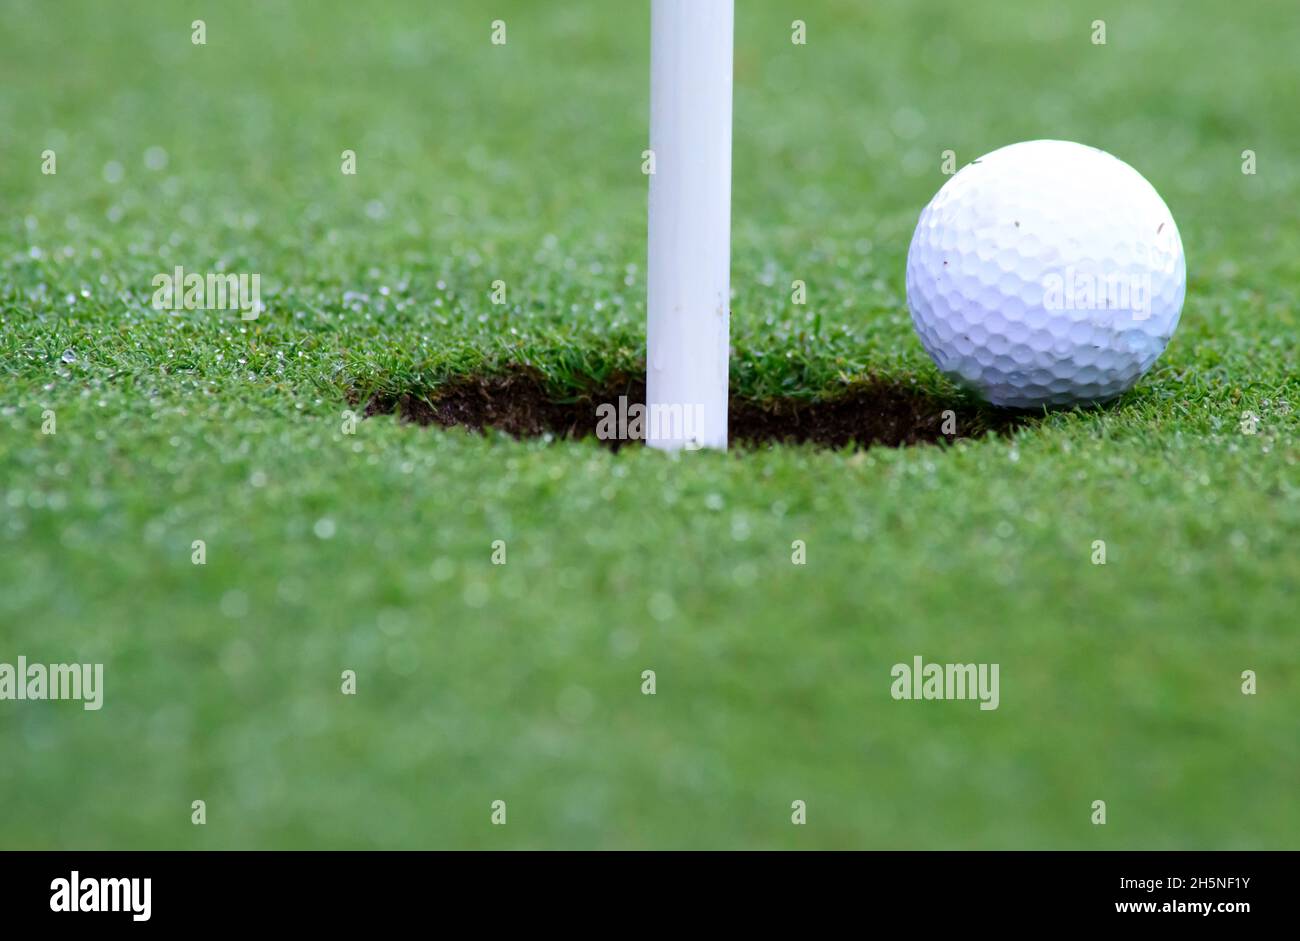 es una fotografia horizontal en la que se ve perfectamente enfocada la pelota de golf en el borde del hoyo Stock Photo